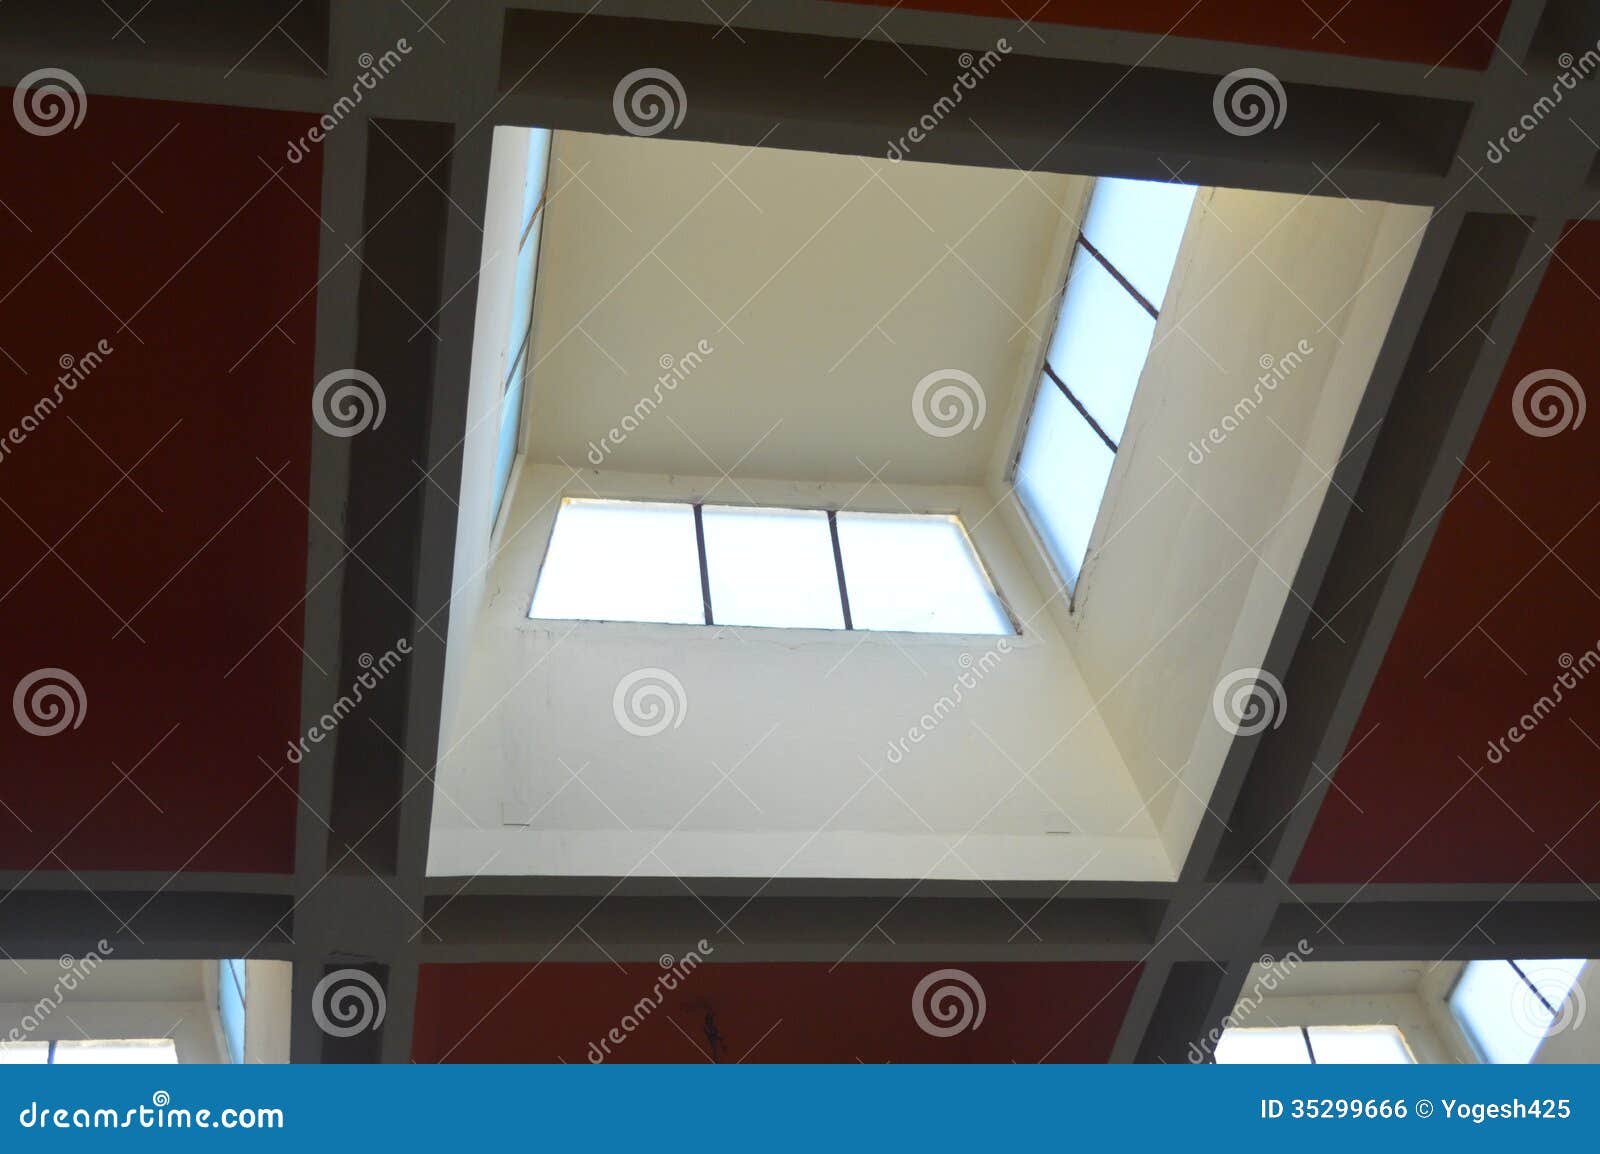 Innovative Ceiling Design Stock Photo Image Of Beautiful 35299666